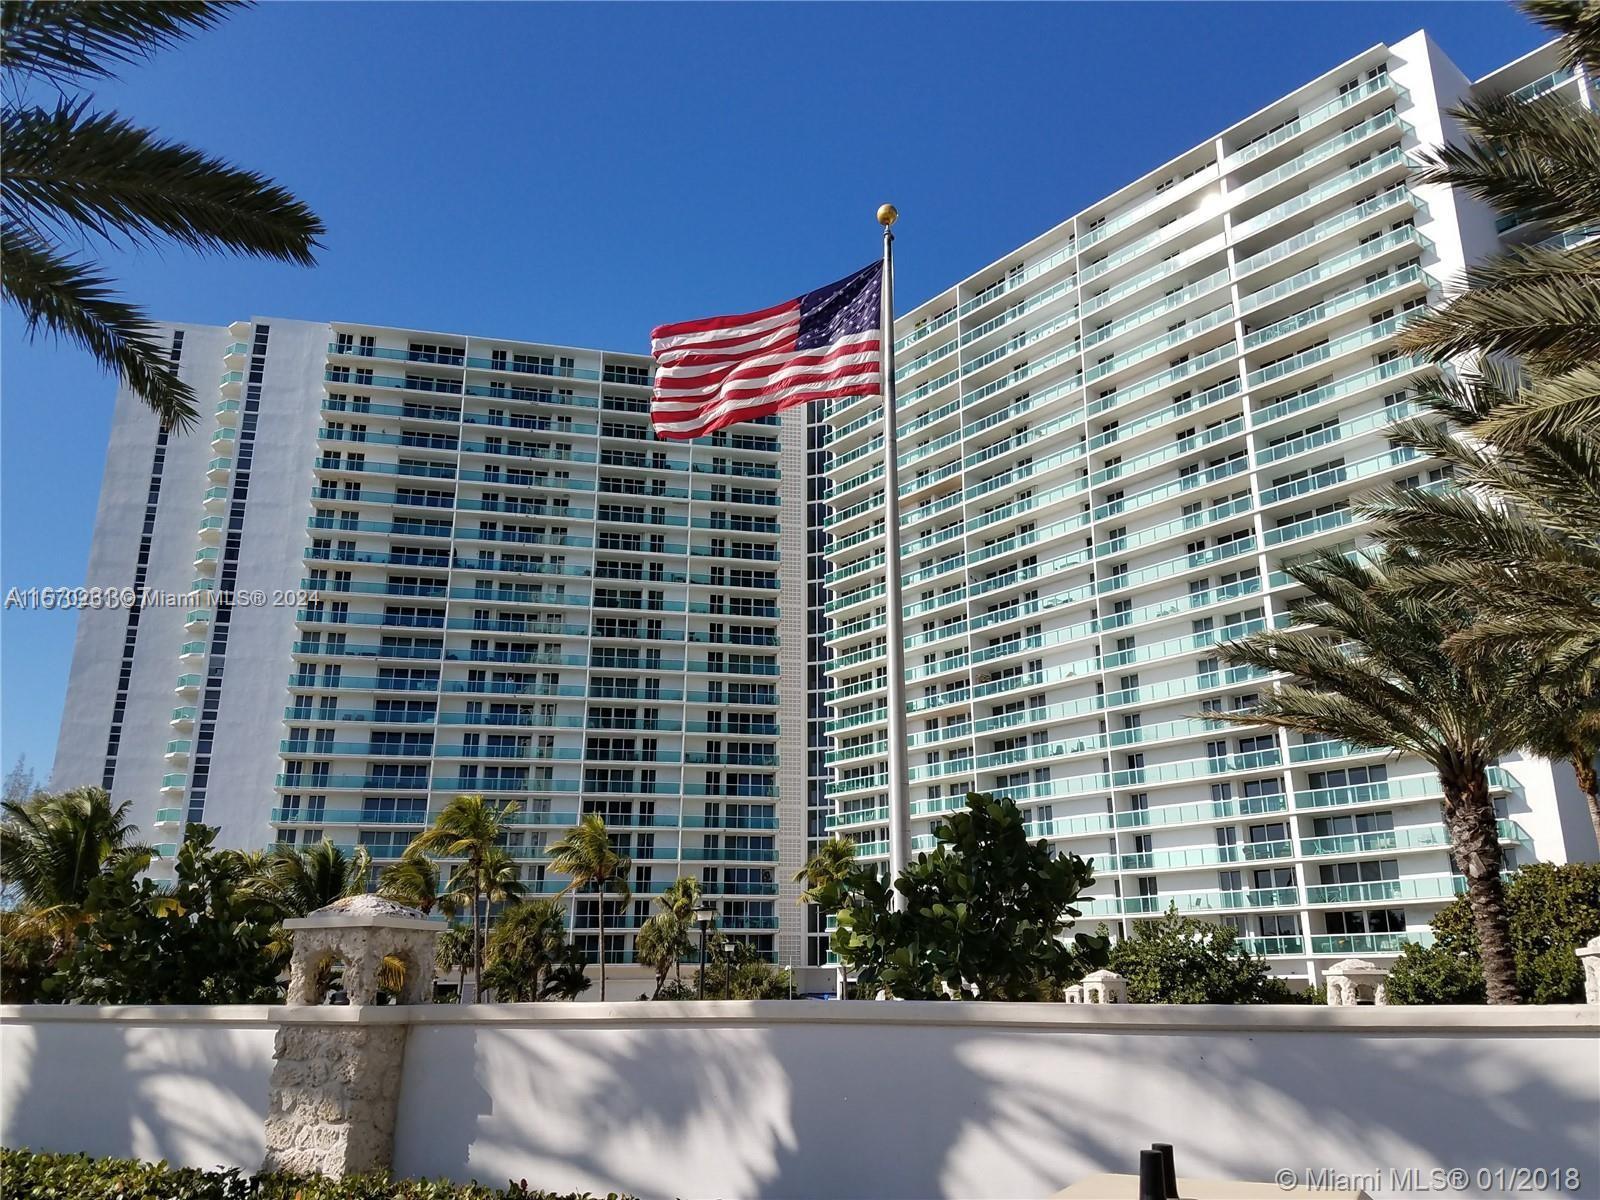 Rental Property at 100 Bayview Dr 1428, Sunny Isles Beach, Miami-Dade County, Florida - Bedrooms: 2 
Bathrooms: 2  - $3,300 MO.